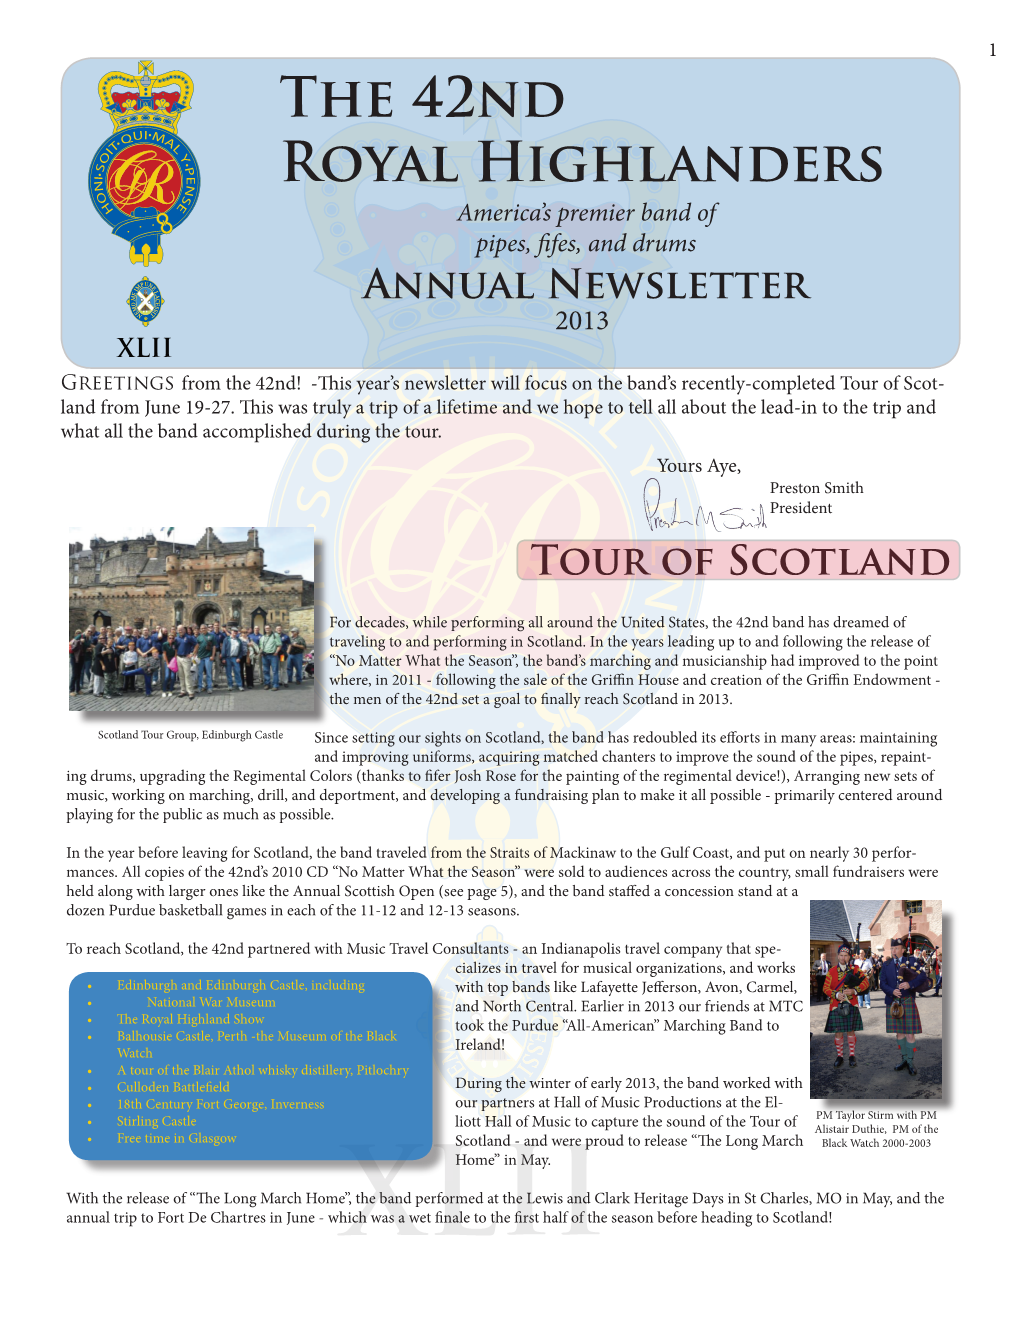 Annual Newsletter, 2013